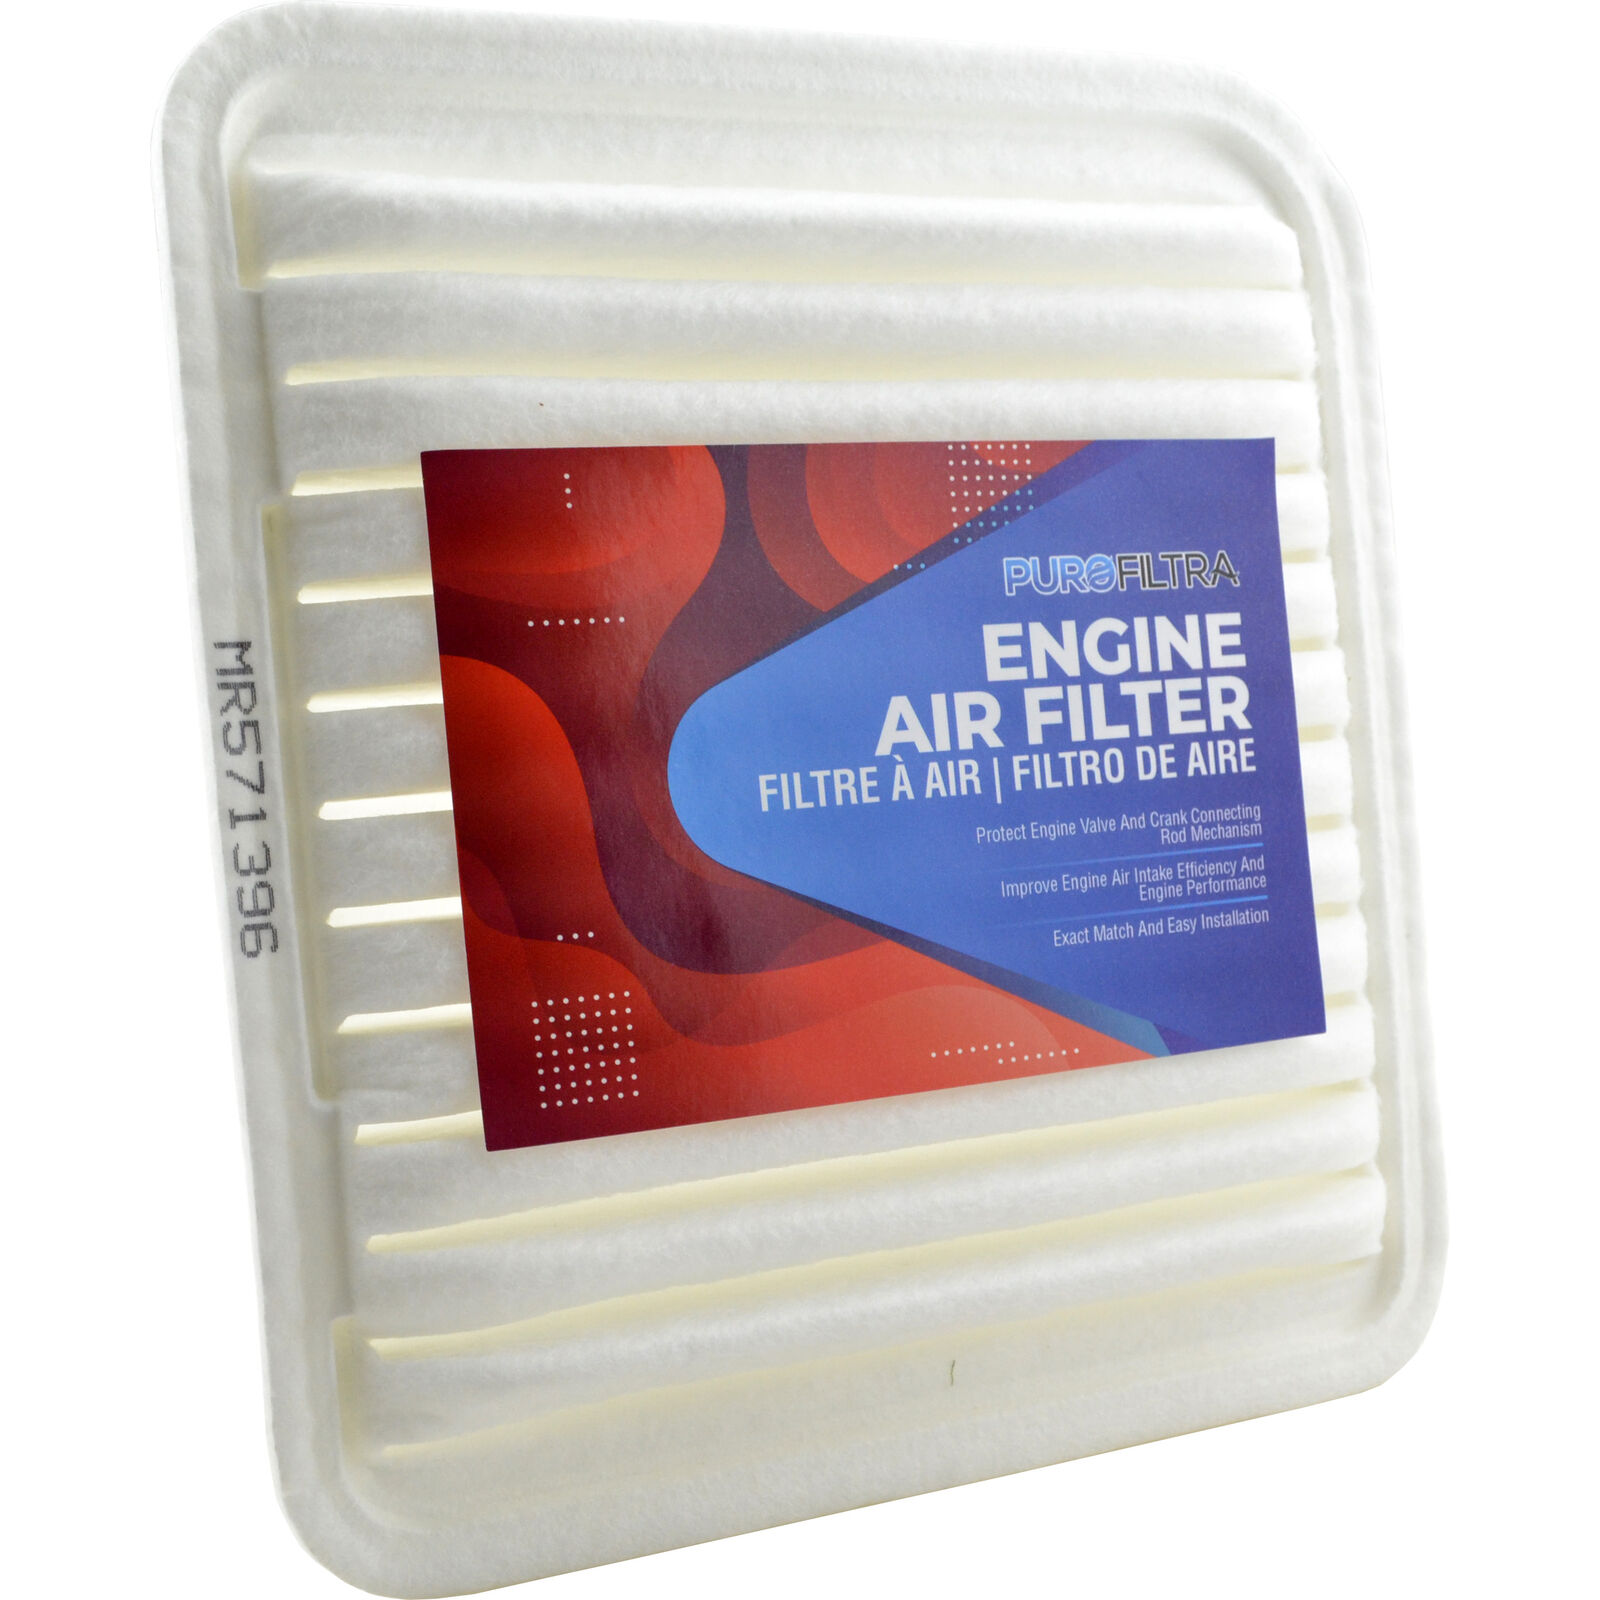 Engine Air Filter for Mitsubishi Galant 2004-2012 L4 2.4L 2004-2009 V6 3.8L